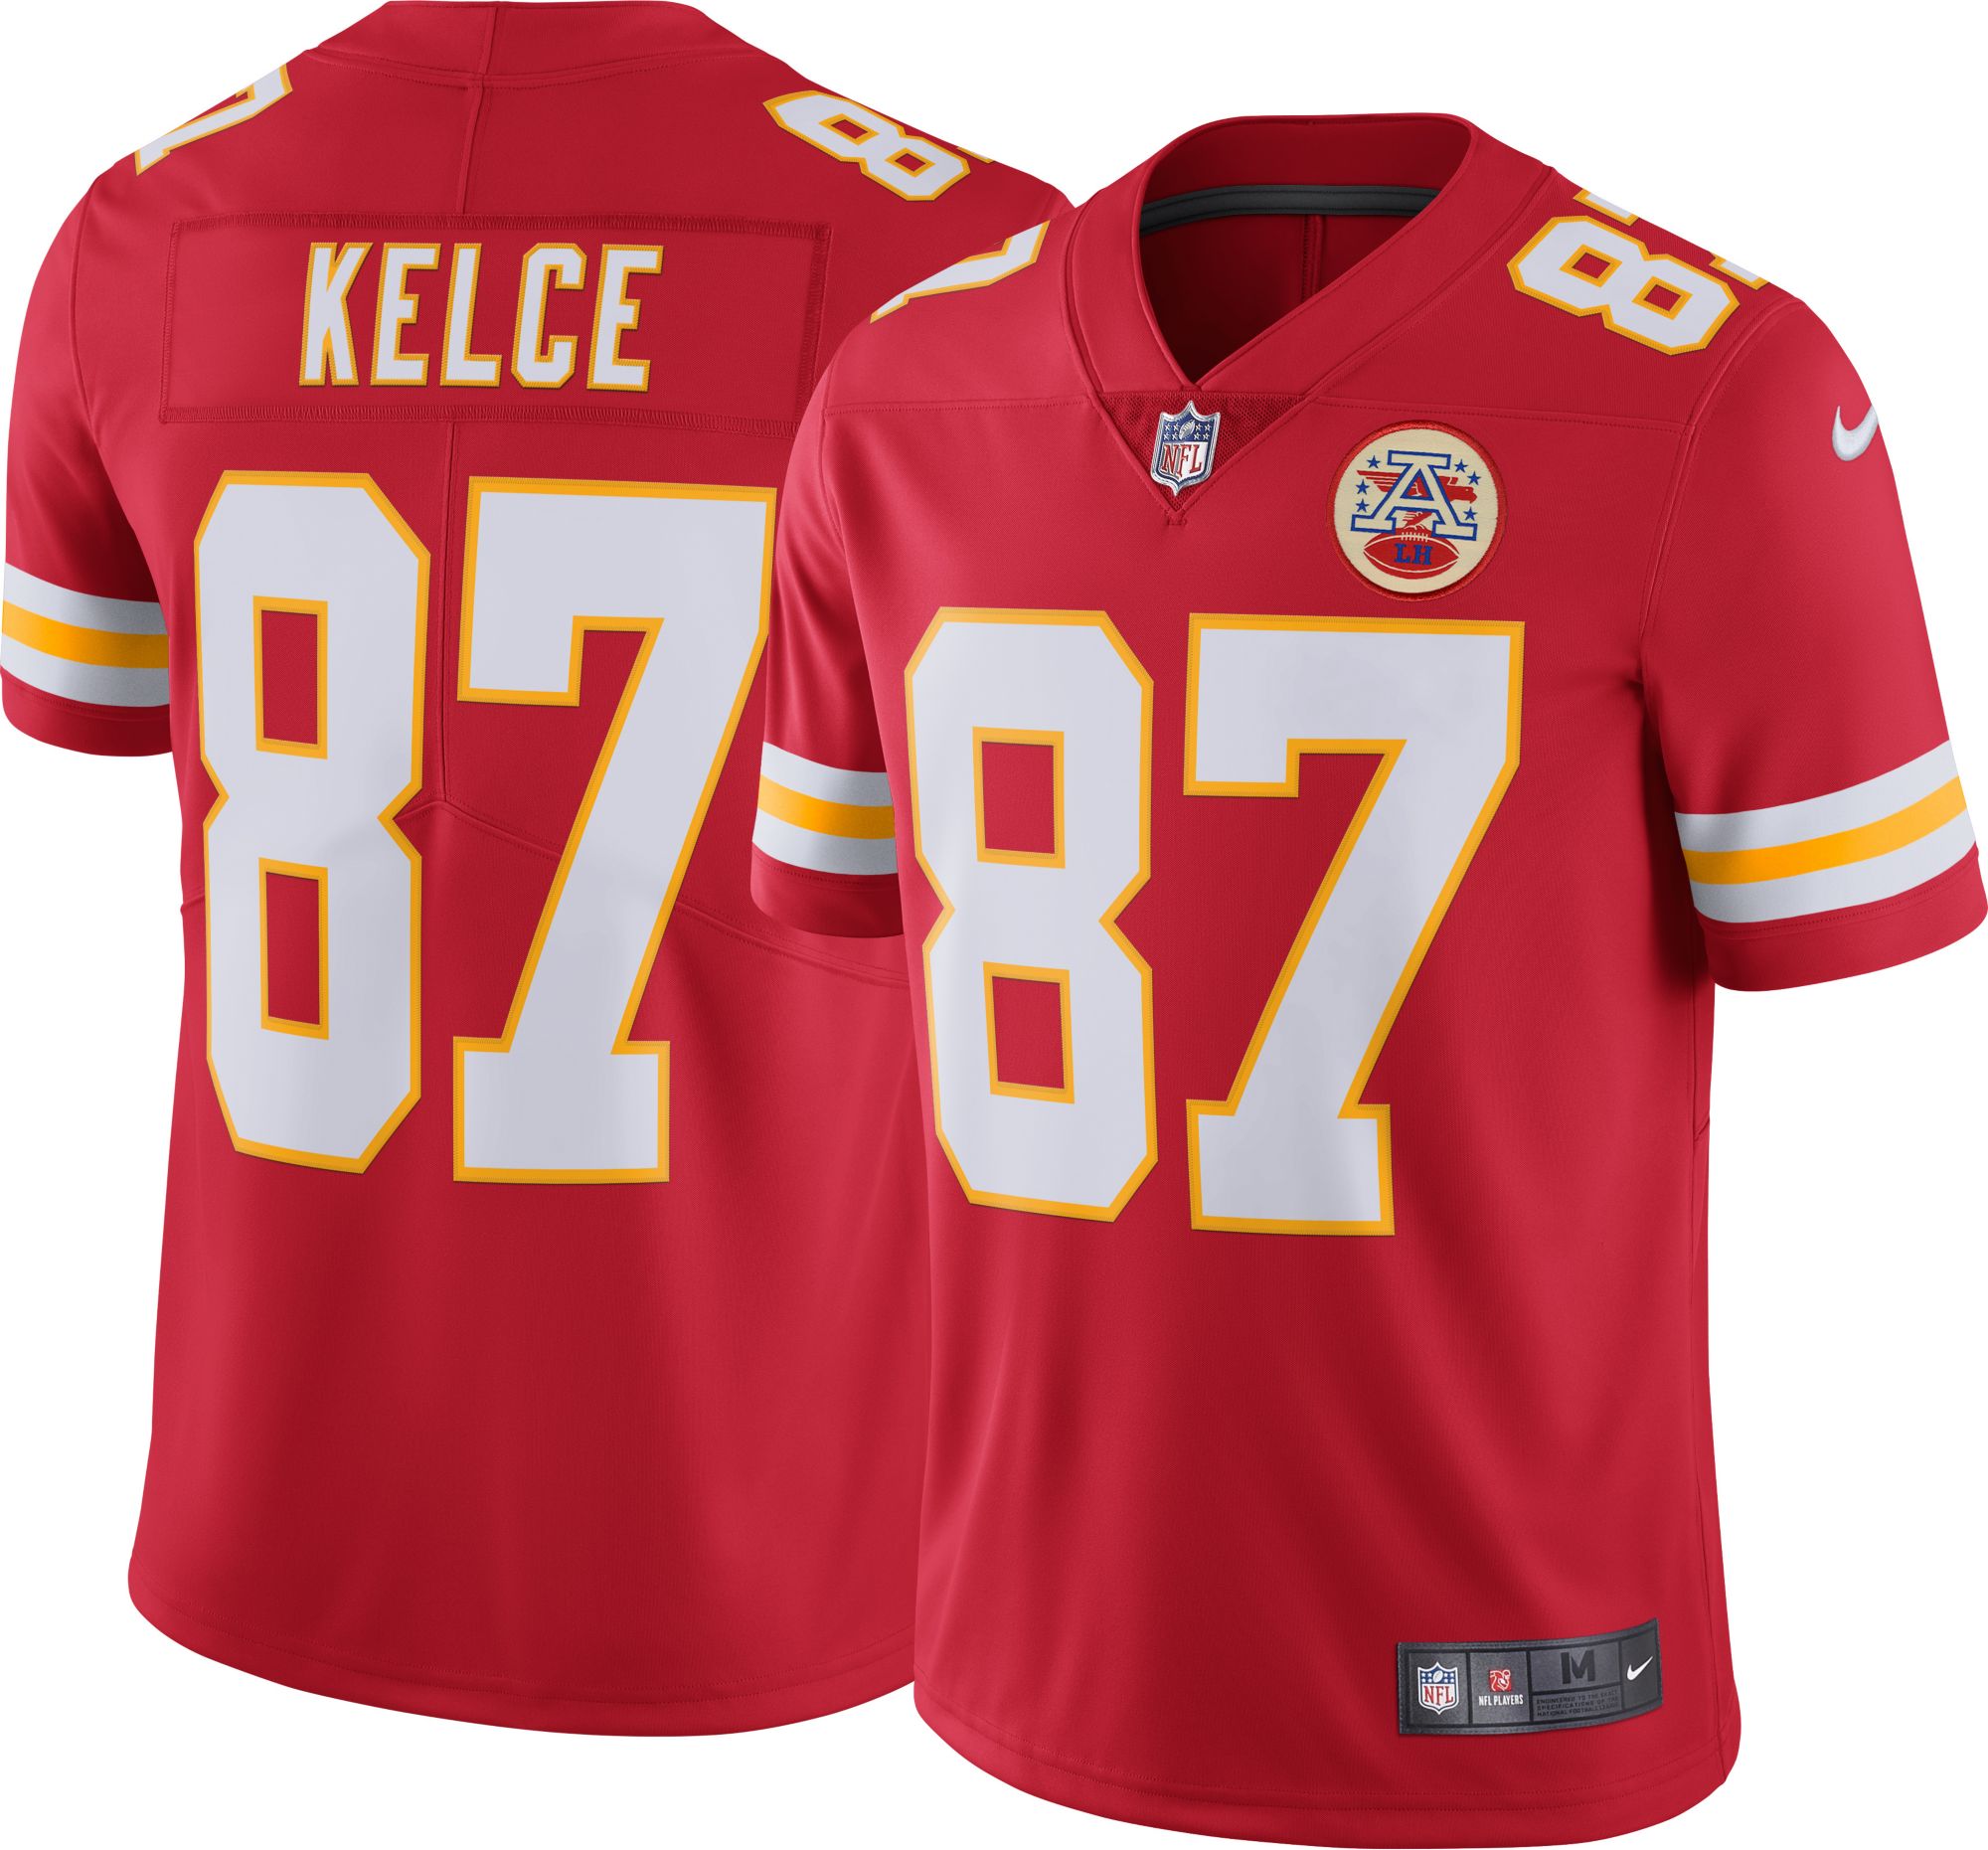 Nike / Men's Kansas City Chiefs Travis Kelce #87 Red Limited Jersey